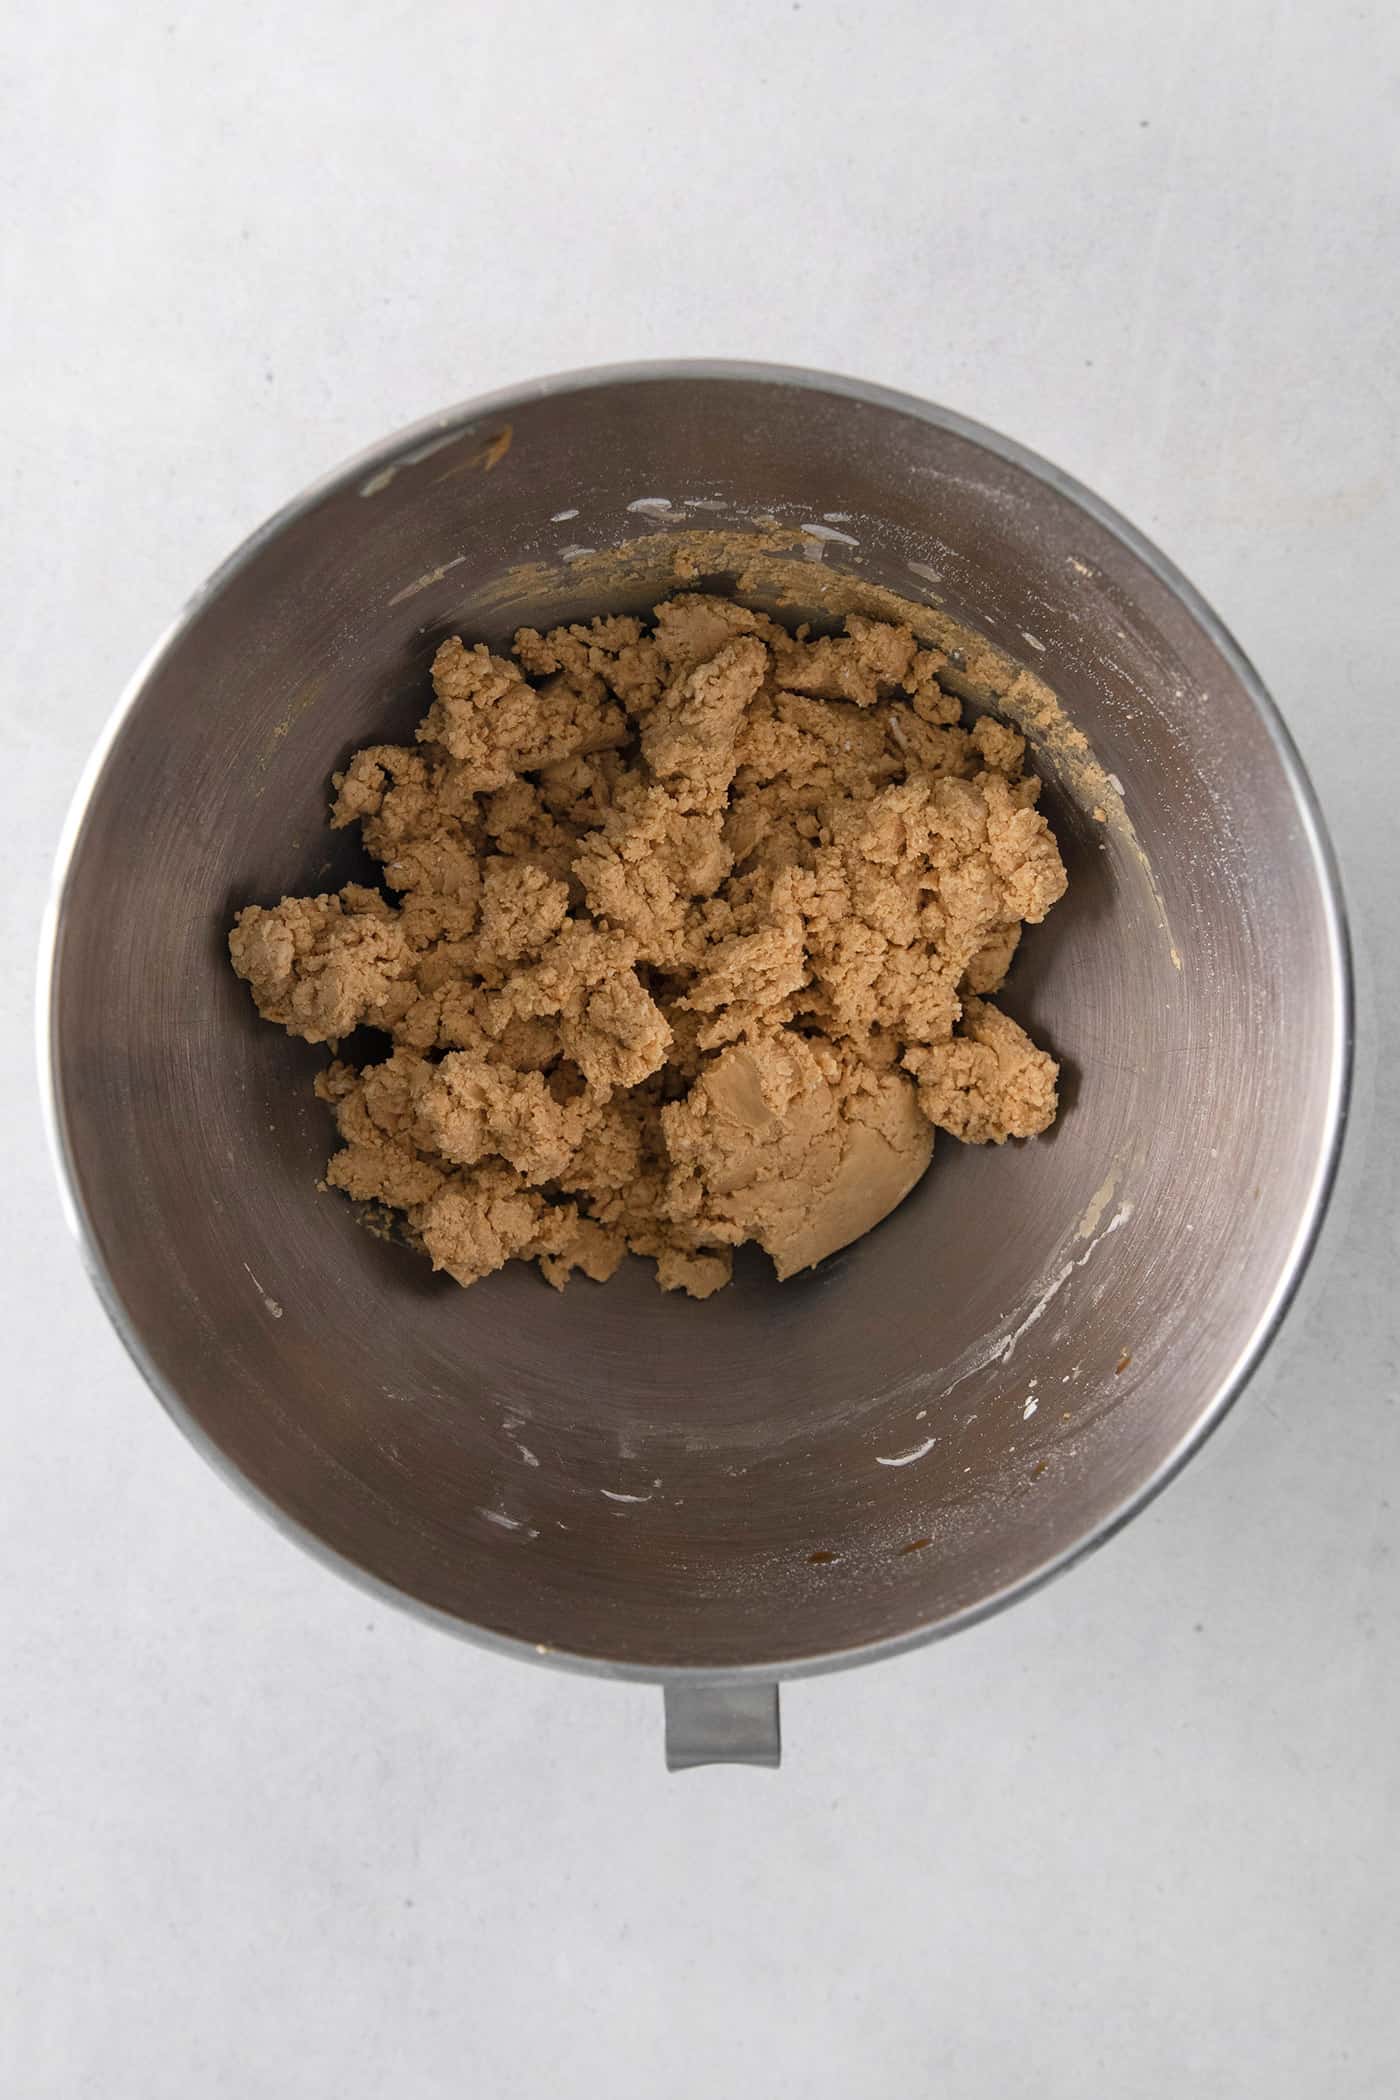 Peanut butter ball dough in a mixing bowl